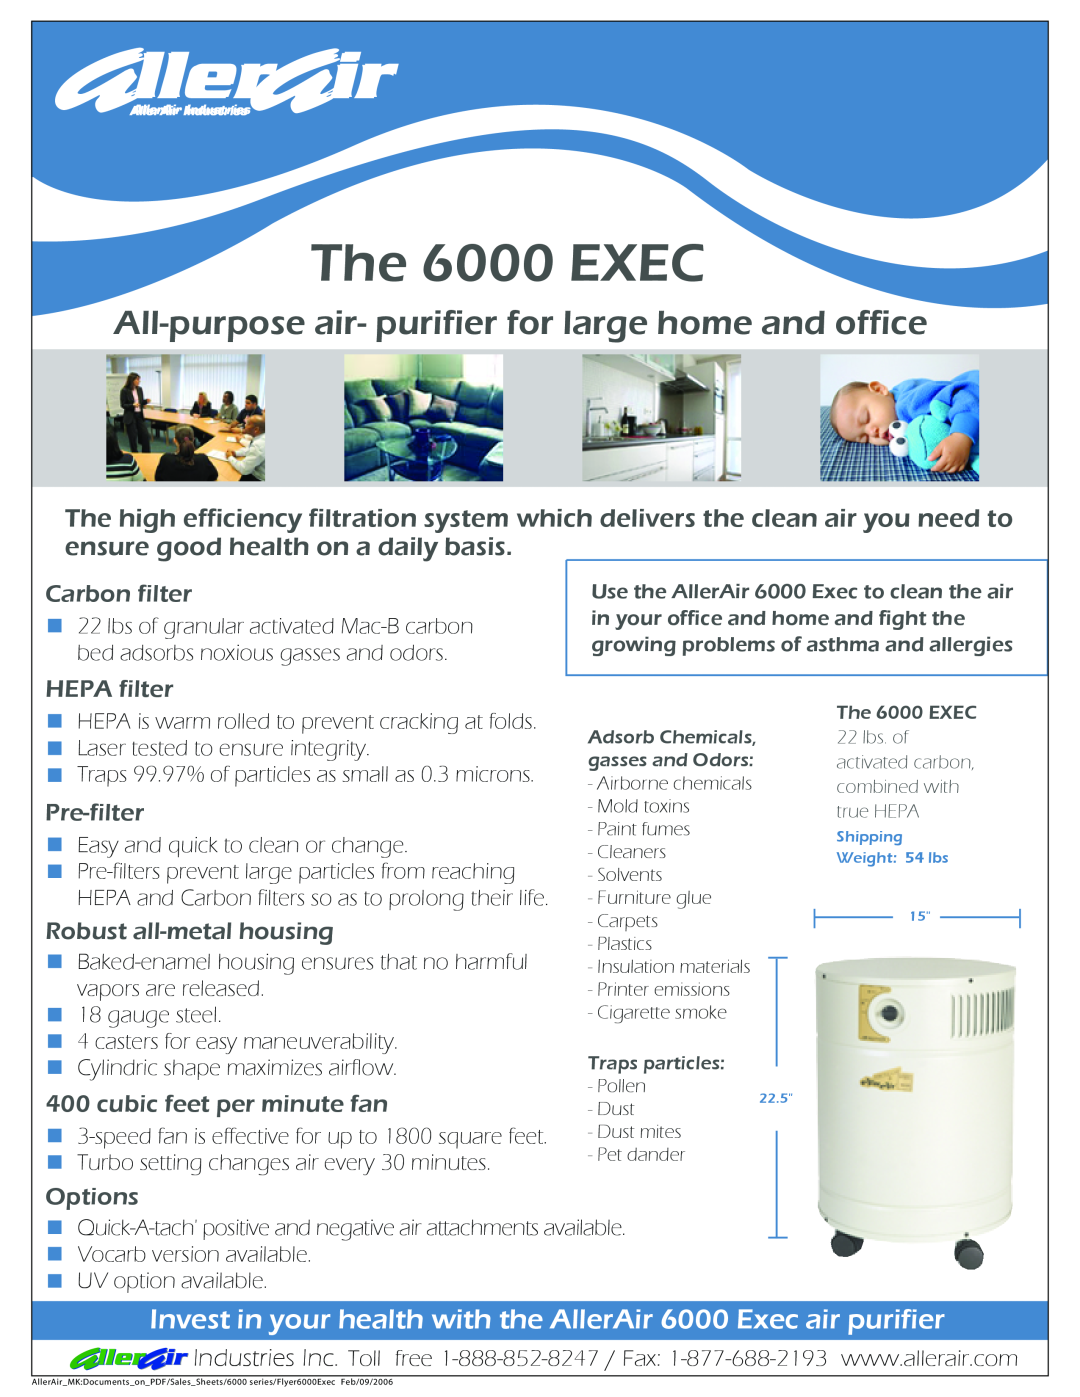 AllerAir The 6000 EXEC manual Carbon filter, HEPA filter, Pre-filter, Robust all-metalhousing, cubic feet per minute fan 